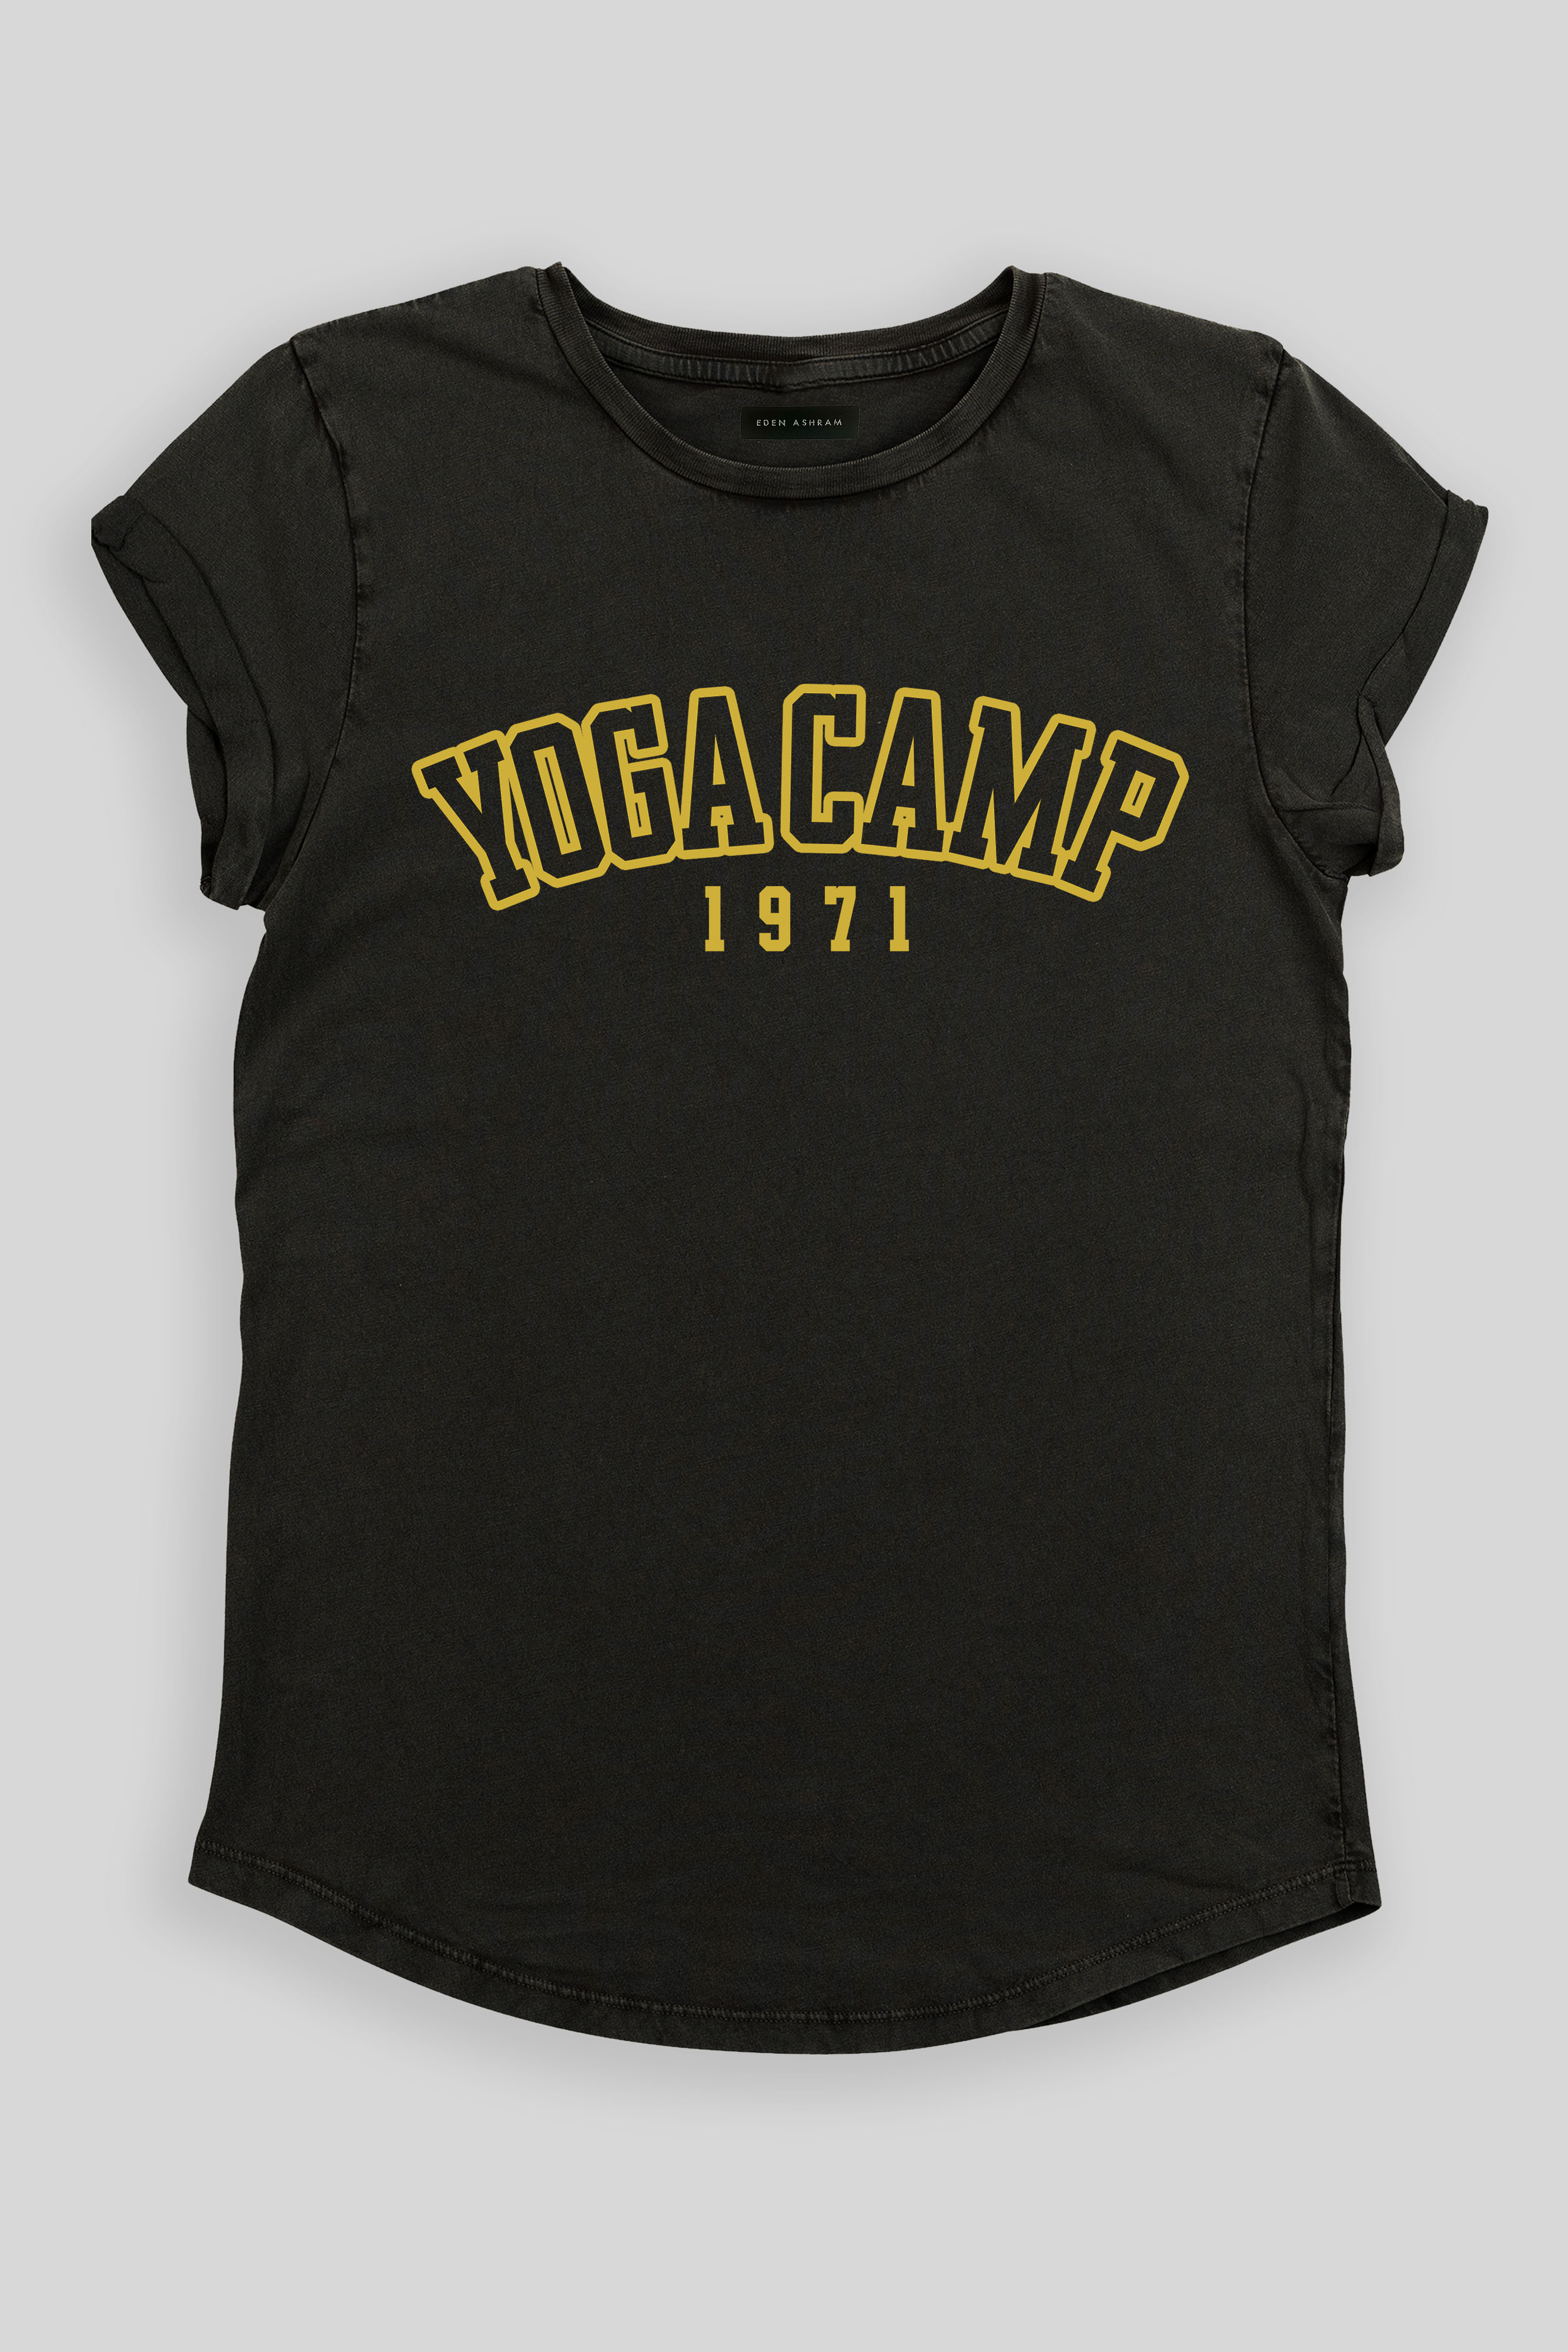 EDEN ASHRAM Yoga Camp 1971 Rolled Sleeve T-Shirt Stonewash Black